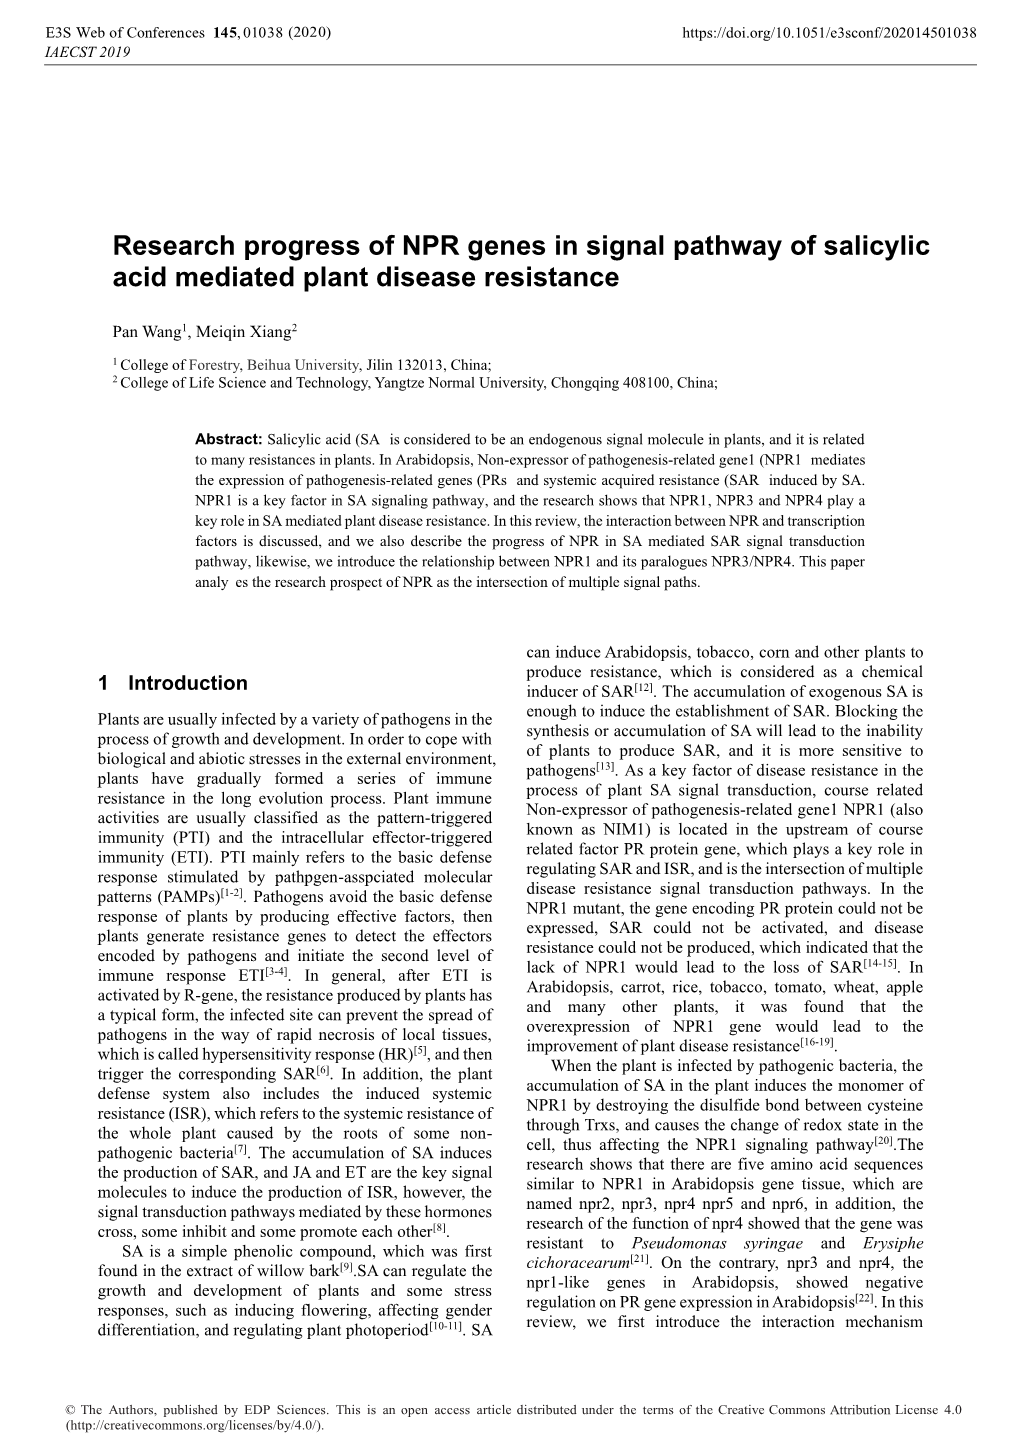 Research Progress of NPR Genes in Signal Pathway of Salicylic Acid Mediated Plant Disease Resistance